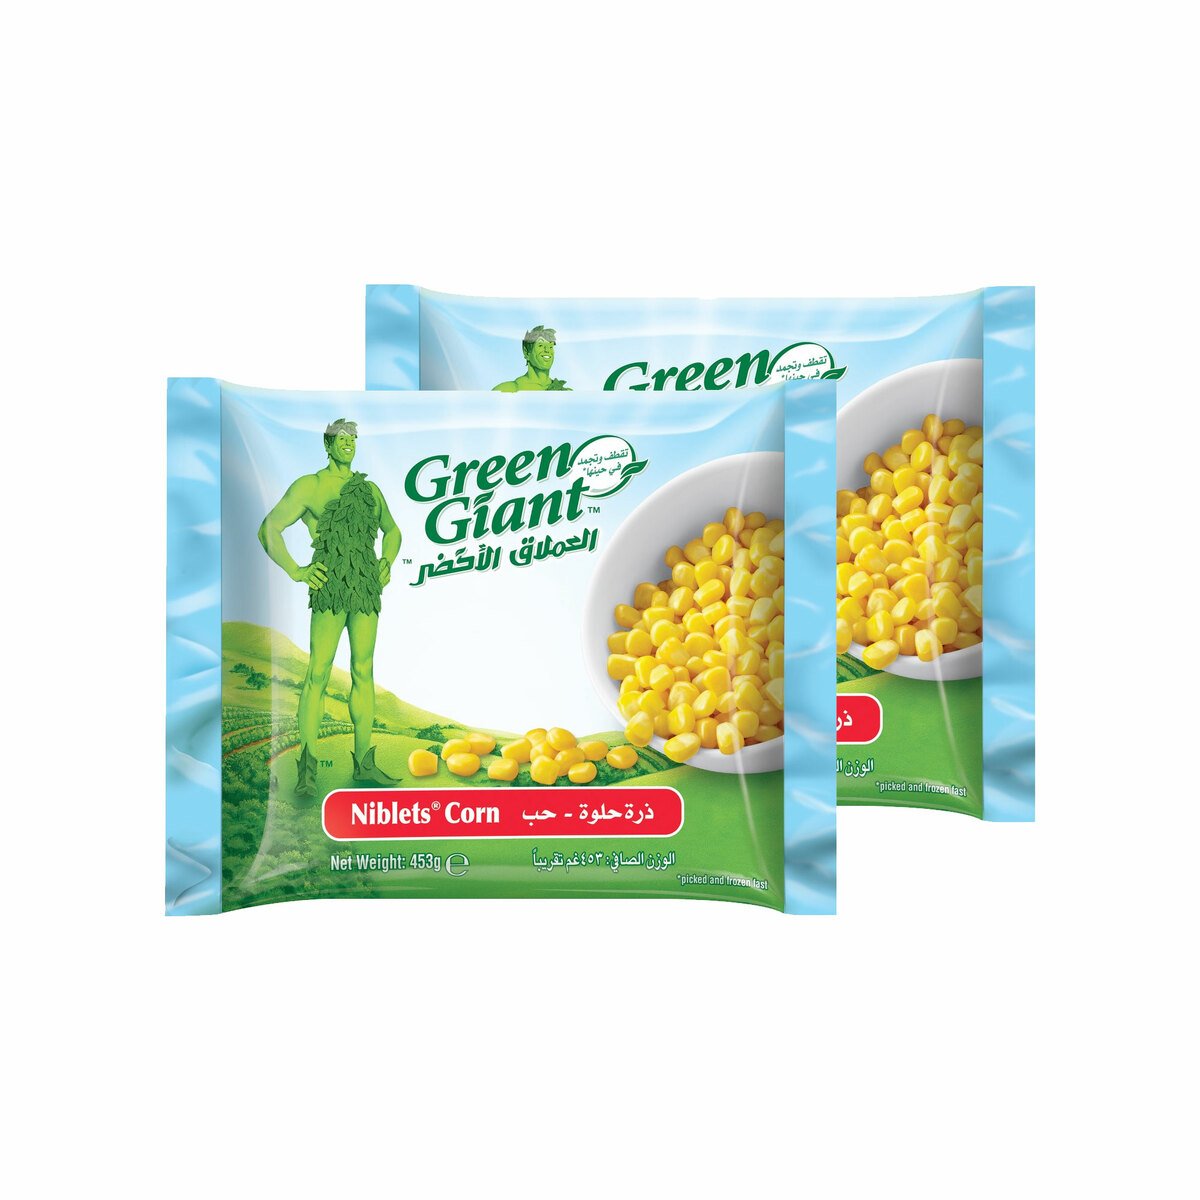 Green Giant Niblets Corn 2 x 453g